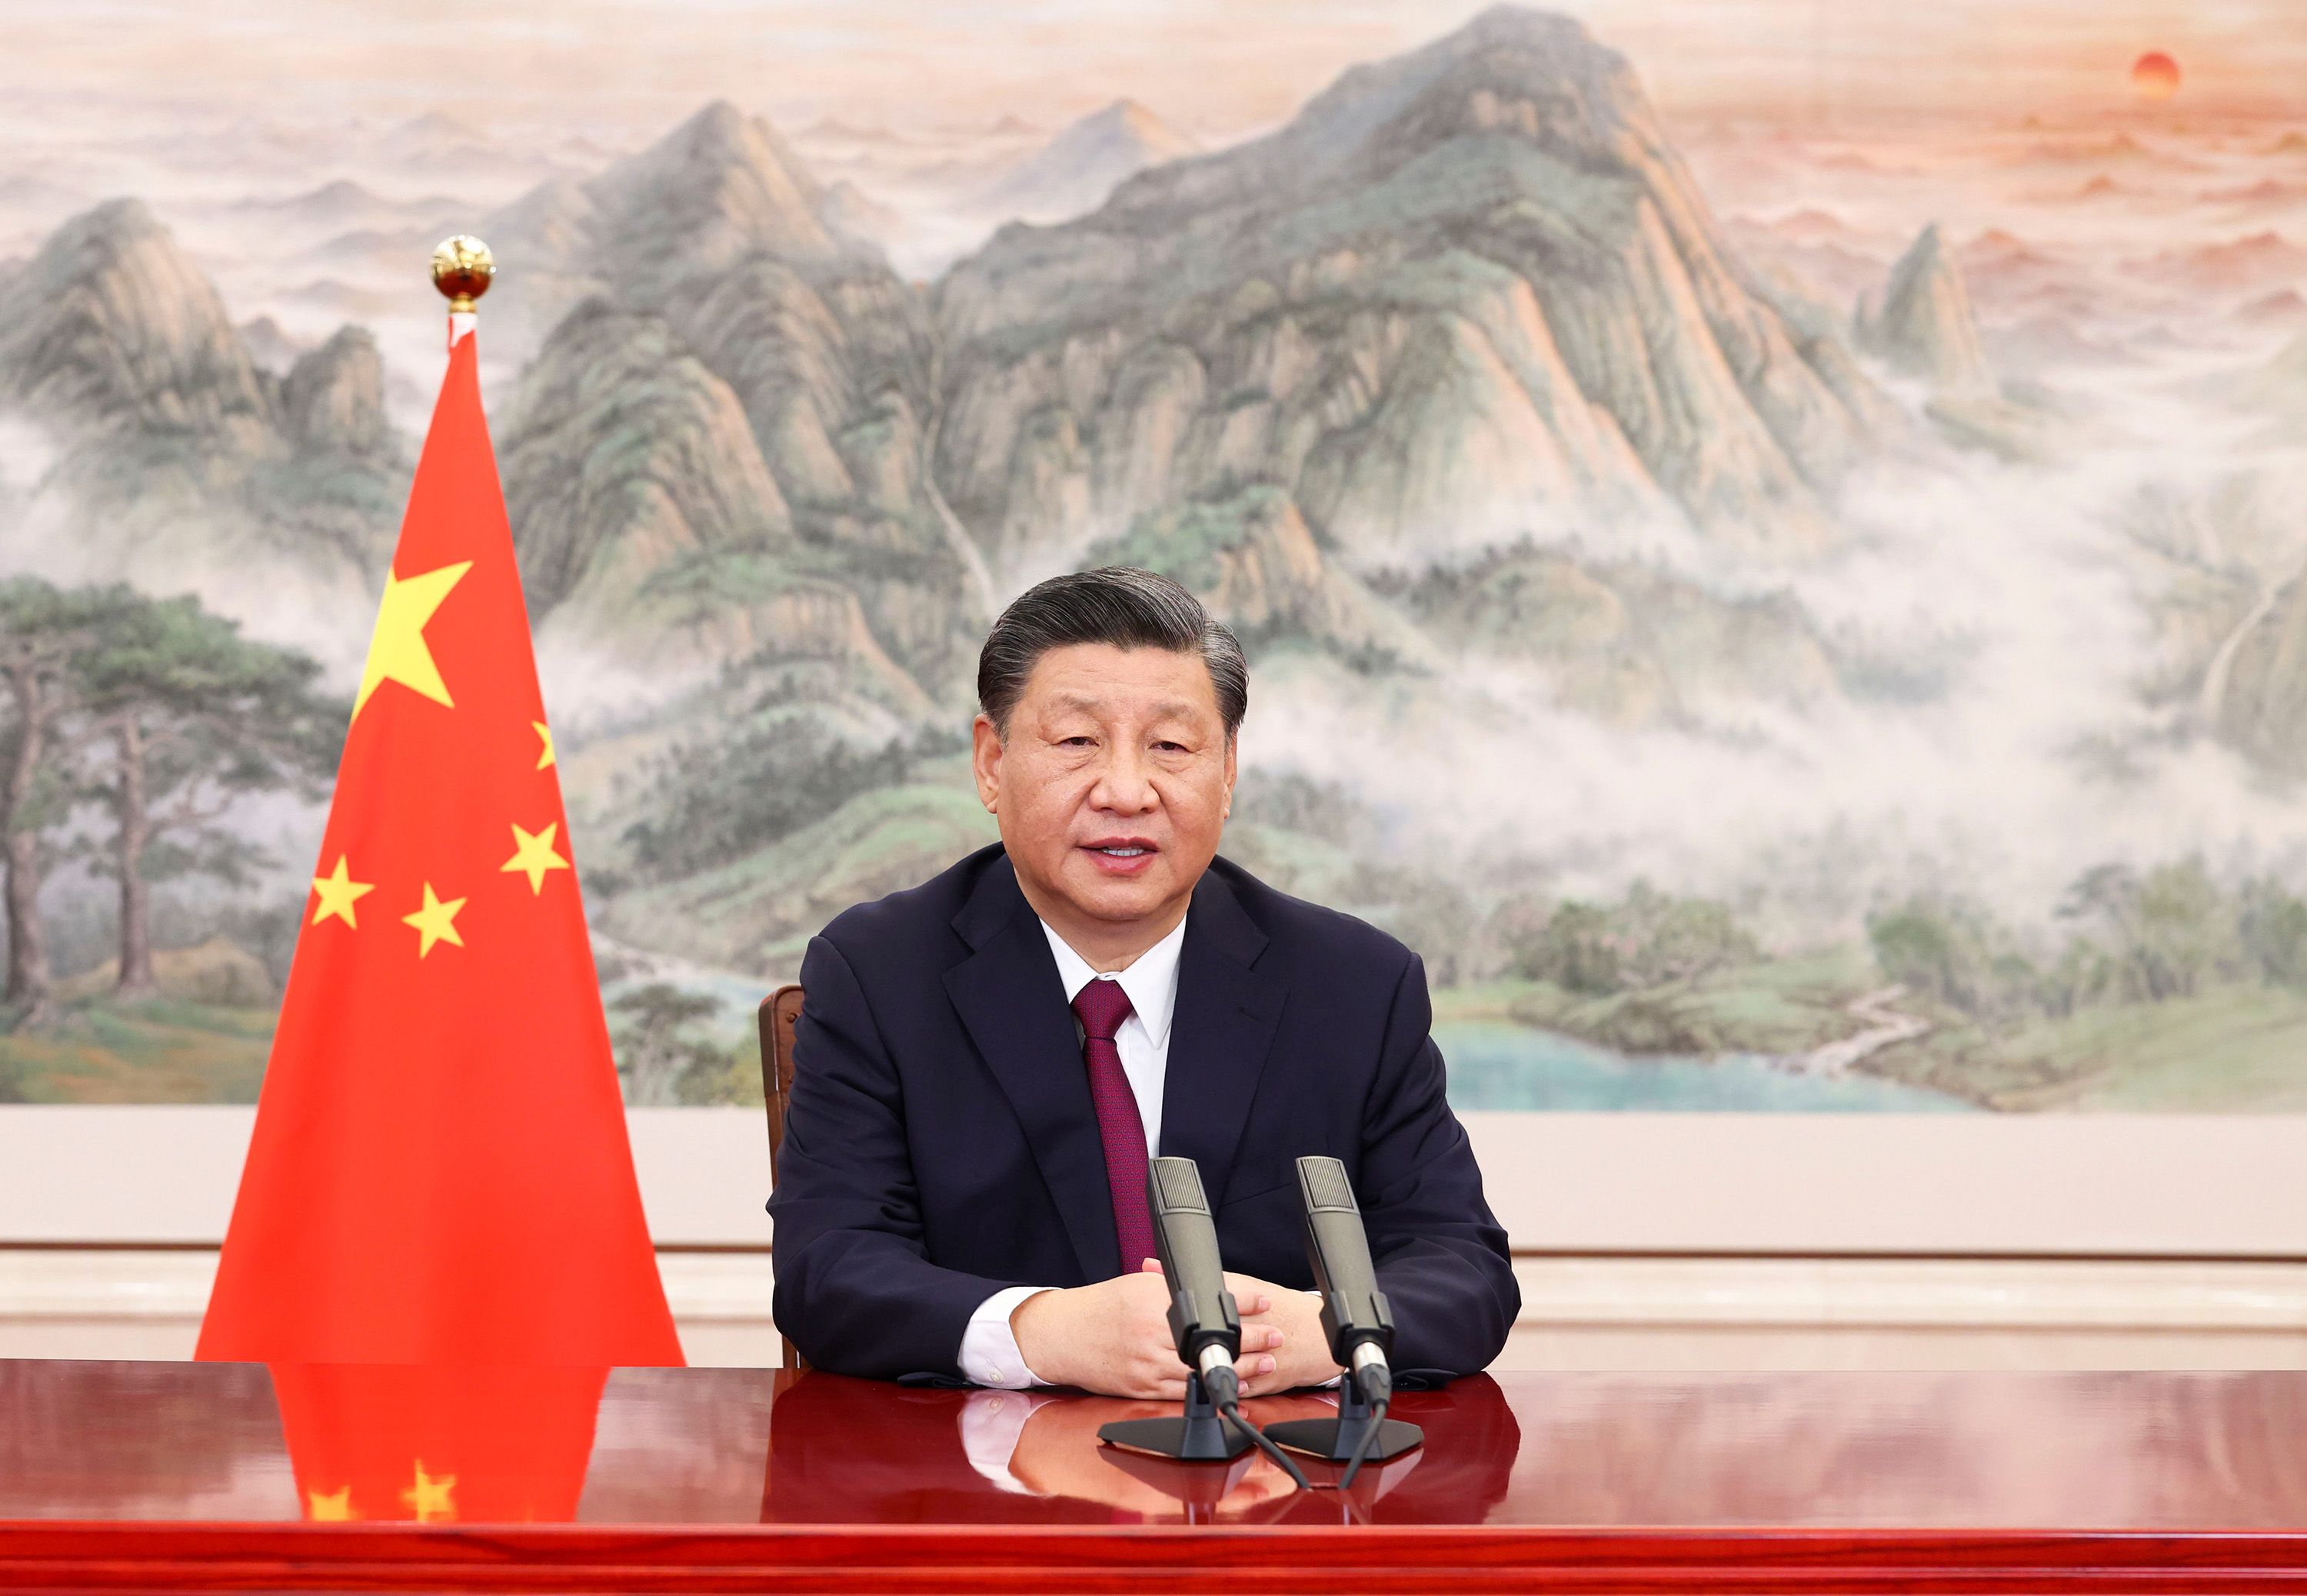 Xi Jinping’s Zero Covid fiasco is a catastrophe